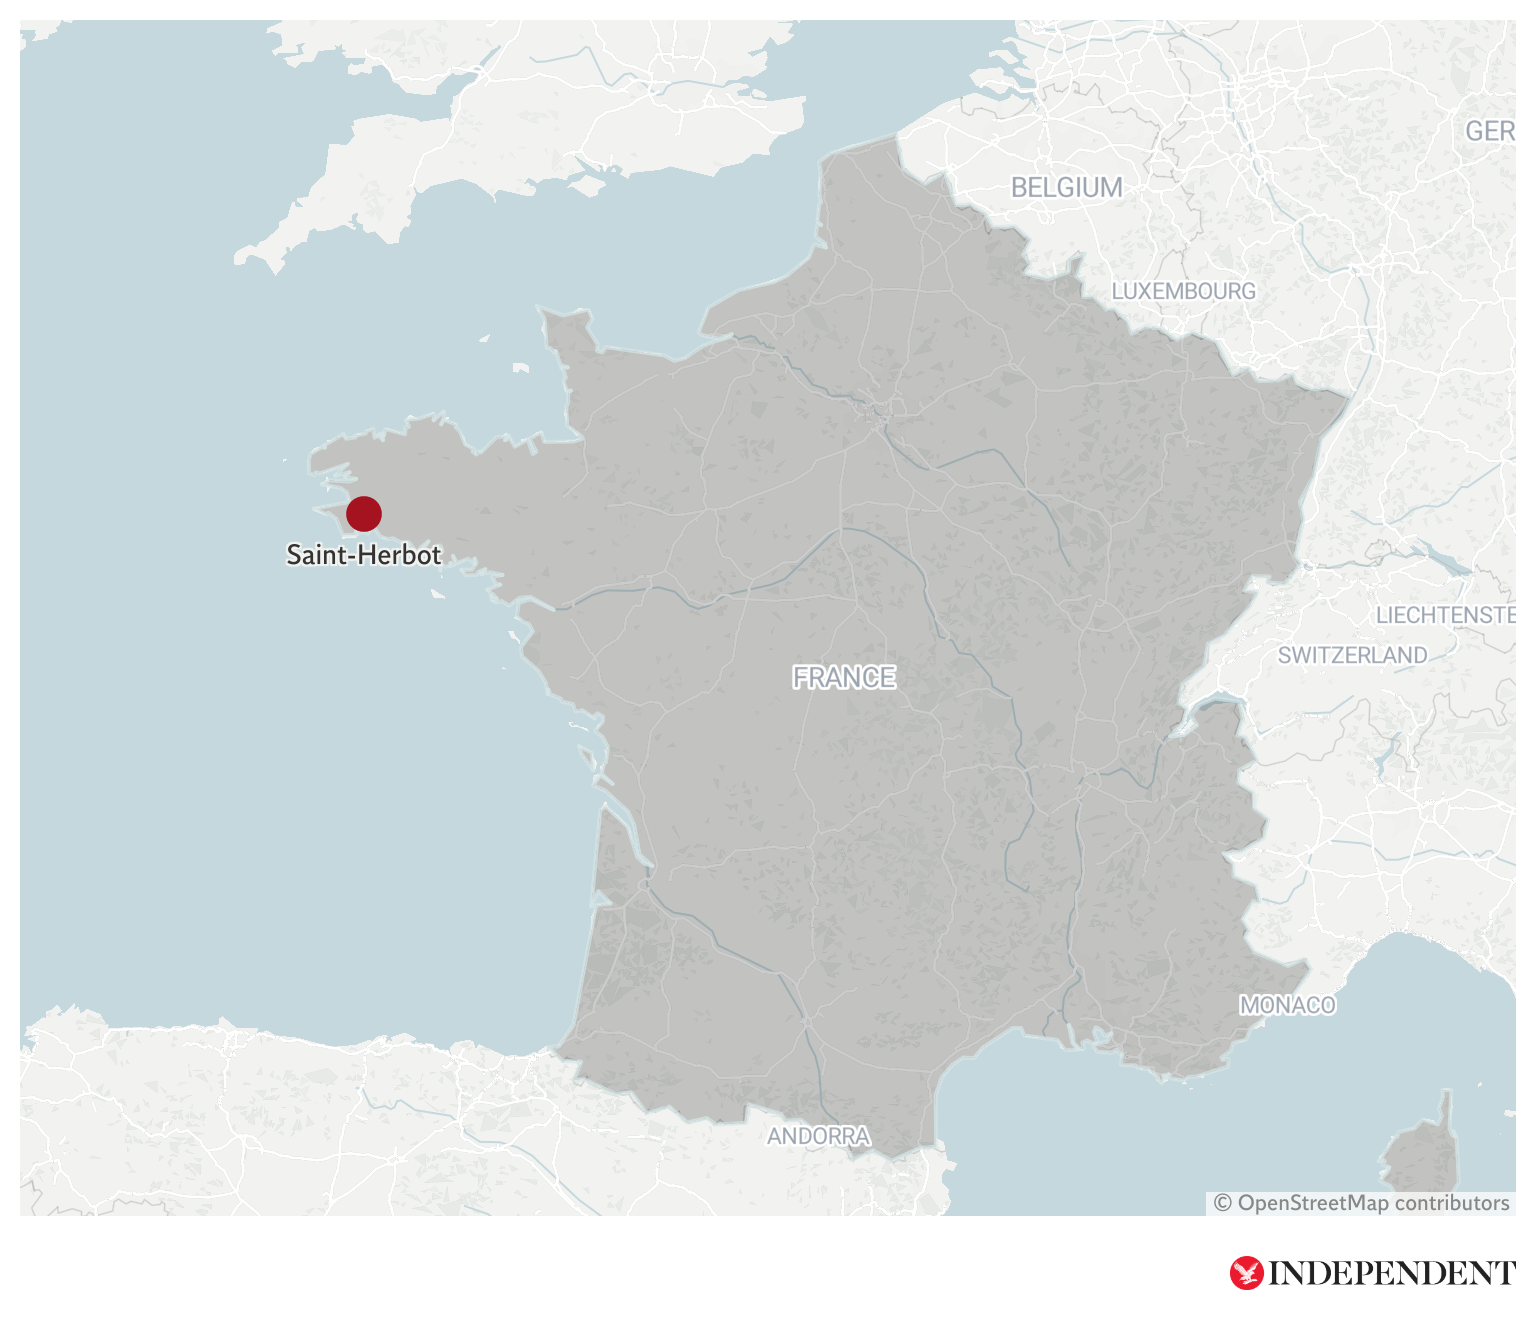 Saint-Herbot in Brittany, where a British schoolgirl has been shot dead